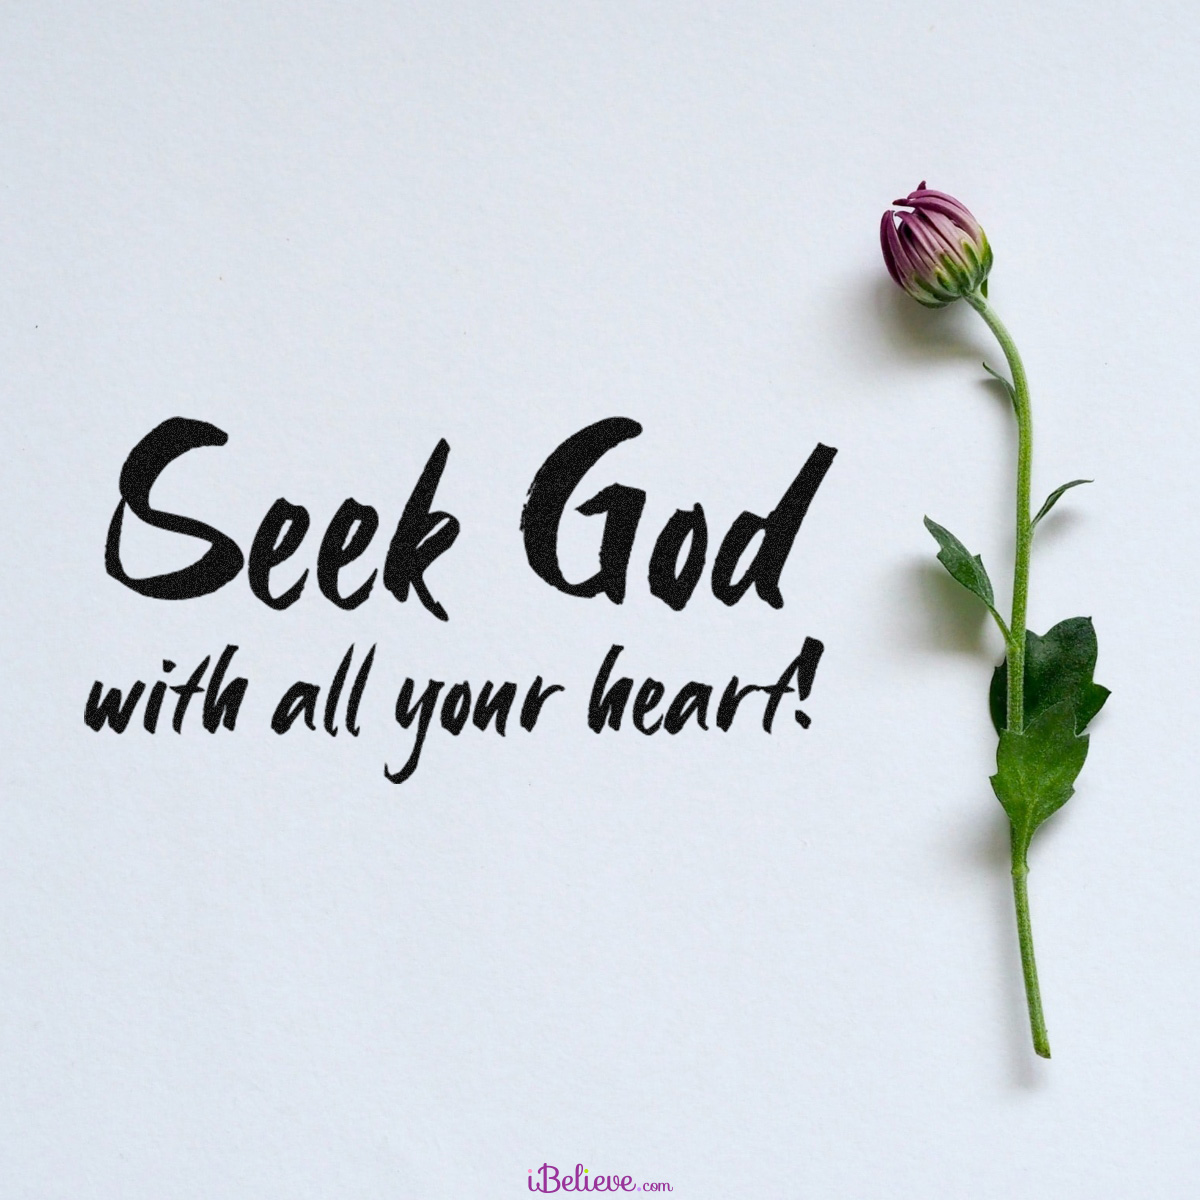 Seek God, inspirational image